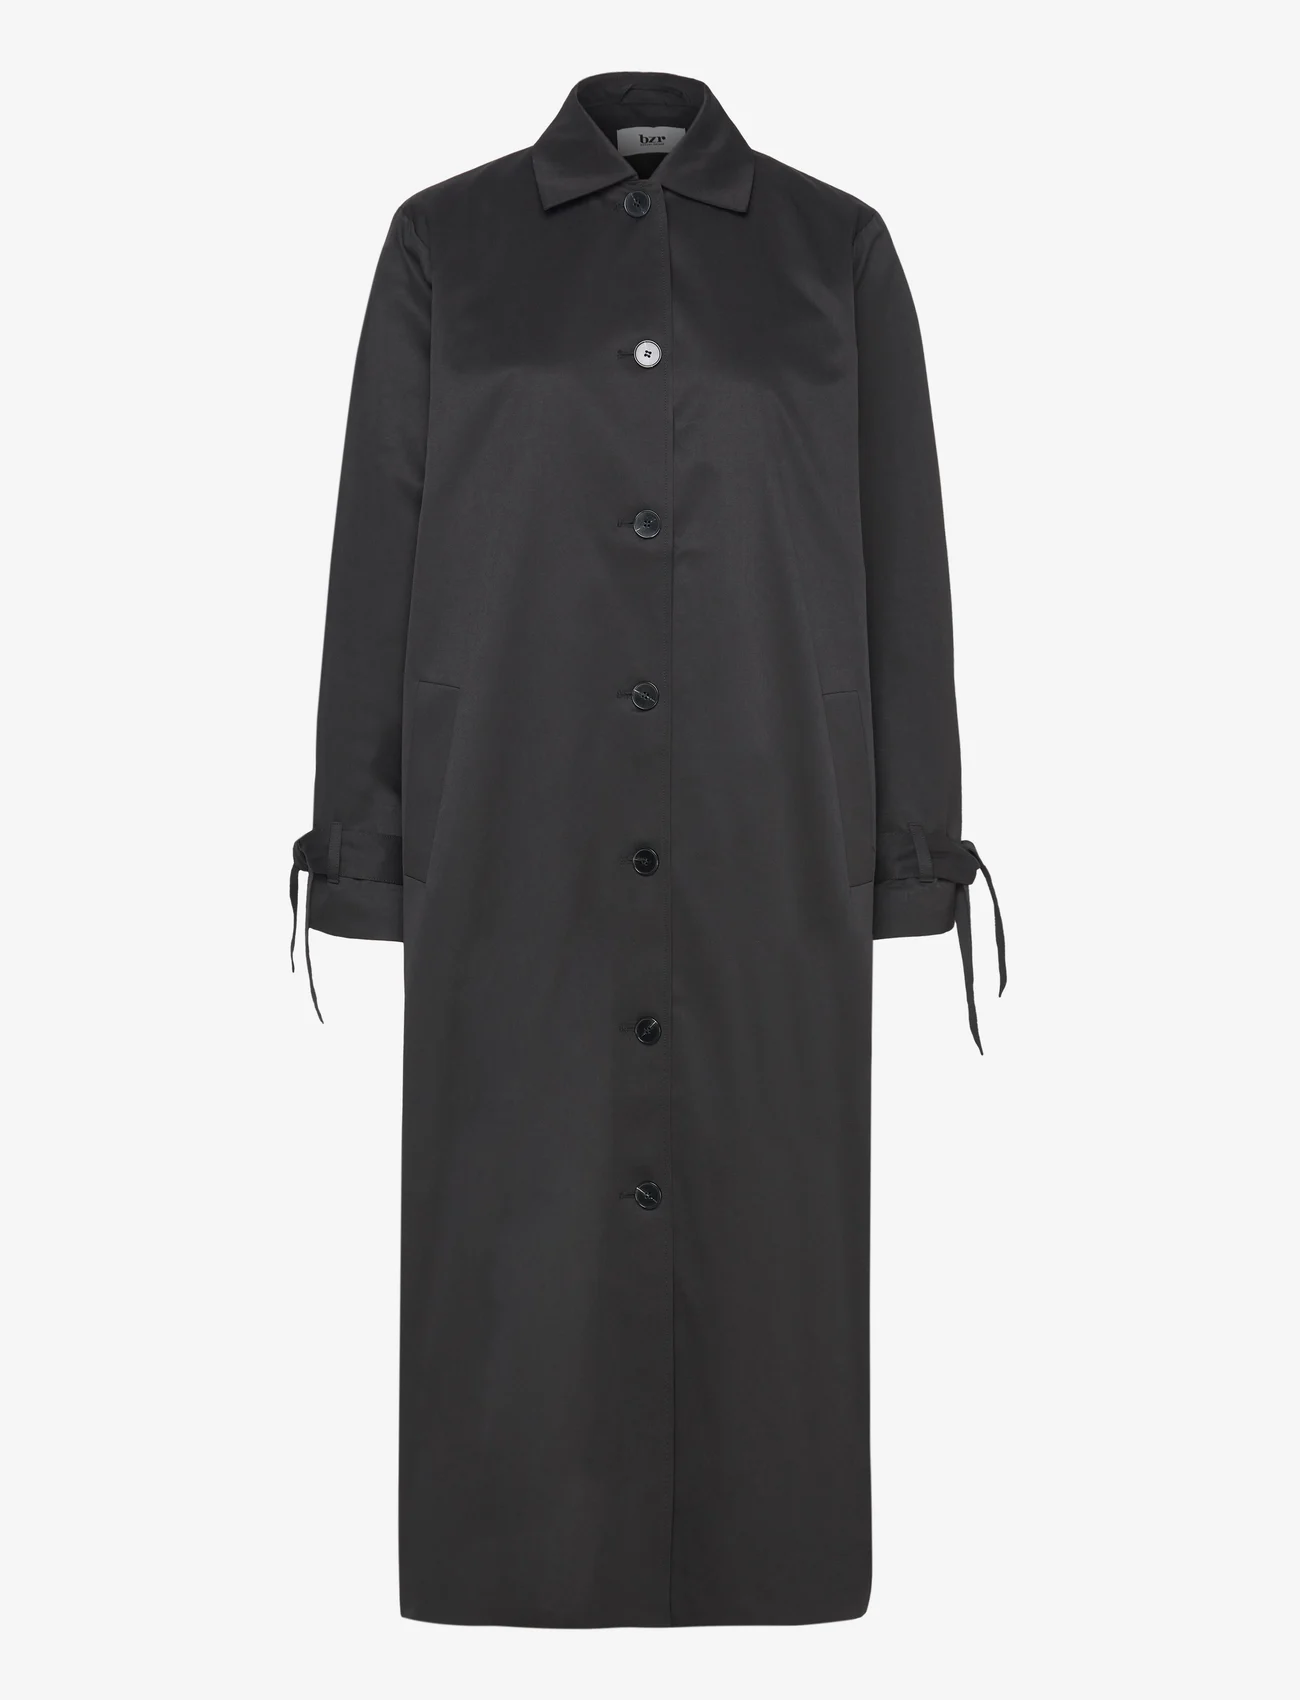 bzr - UtahBZHannah trench coat - kevättakit - black - 0